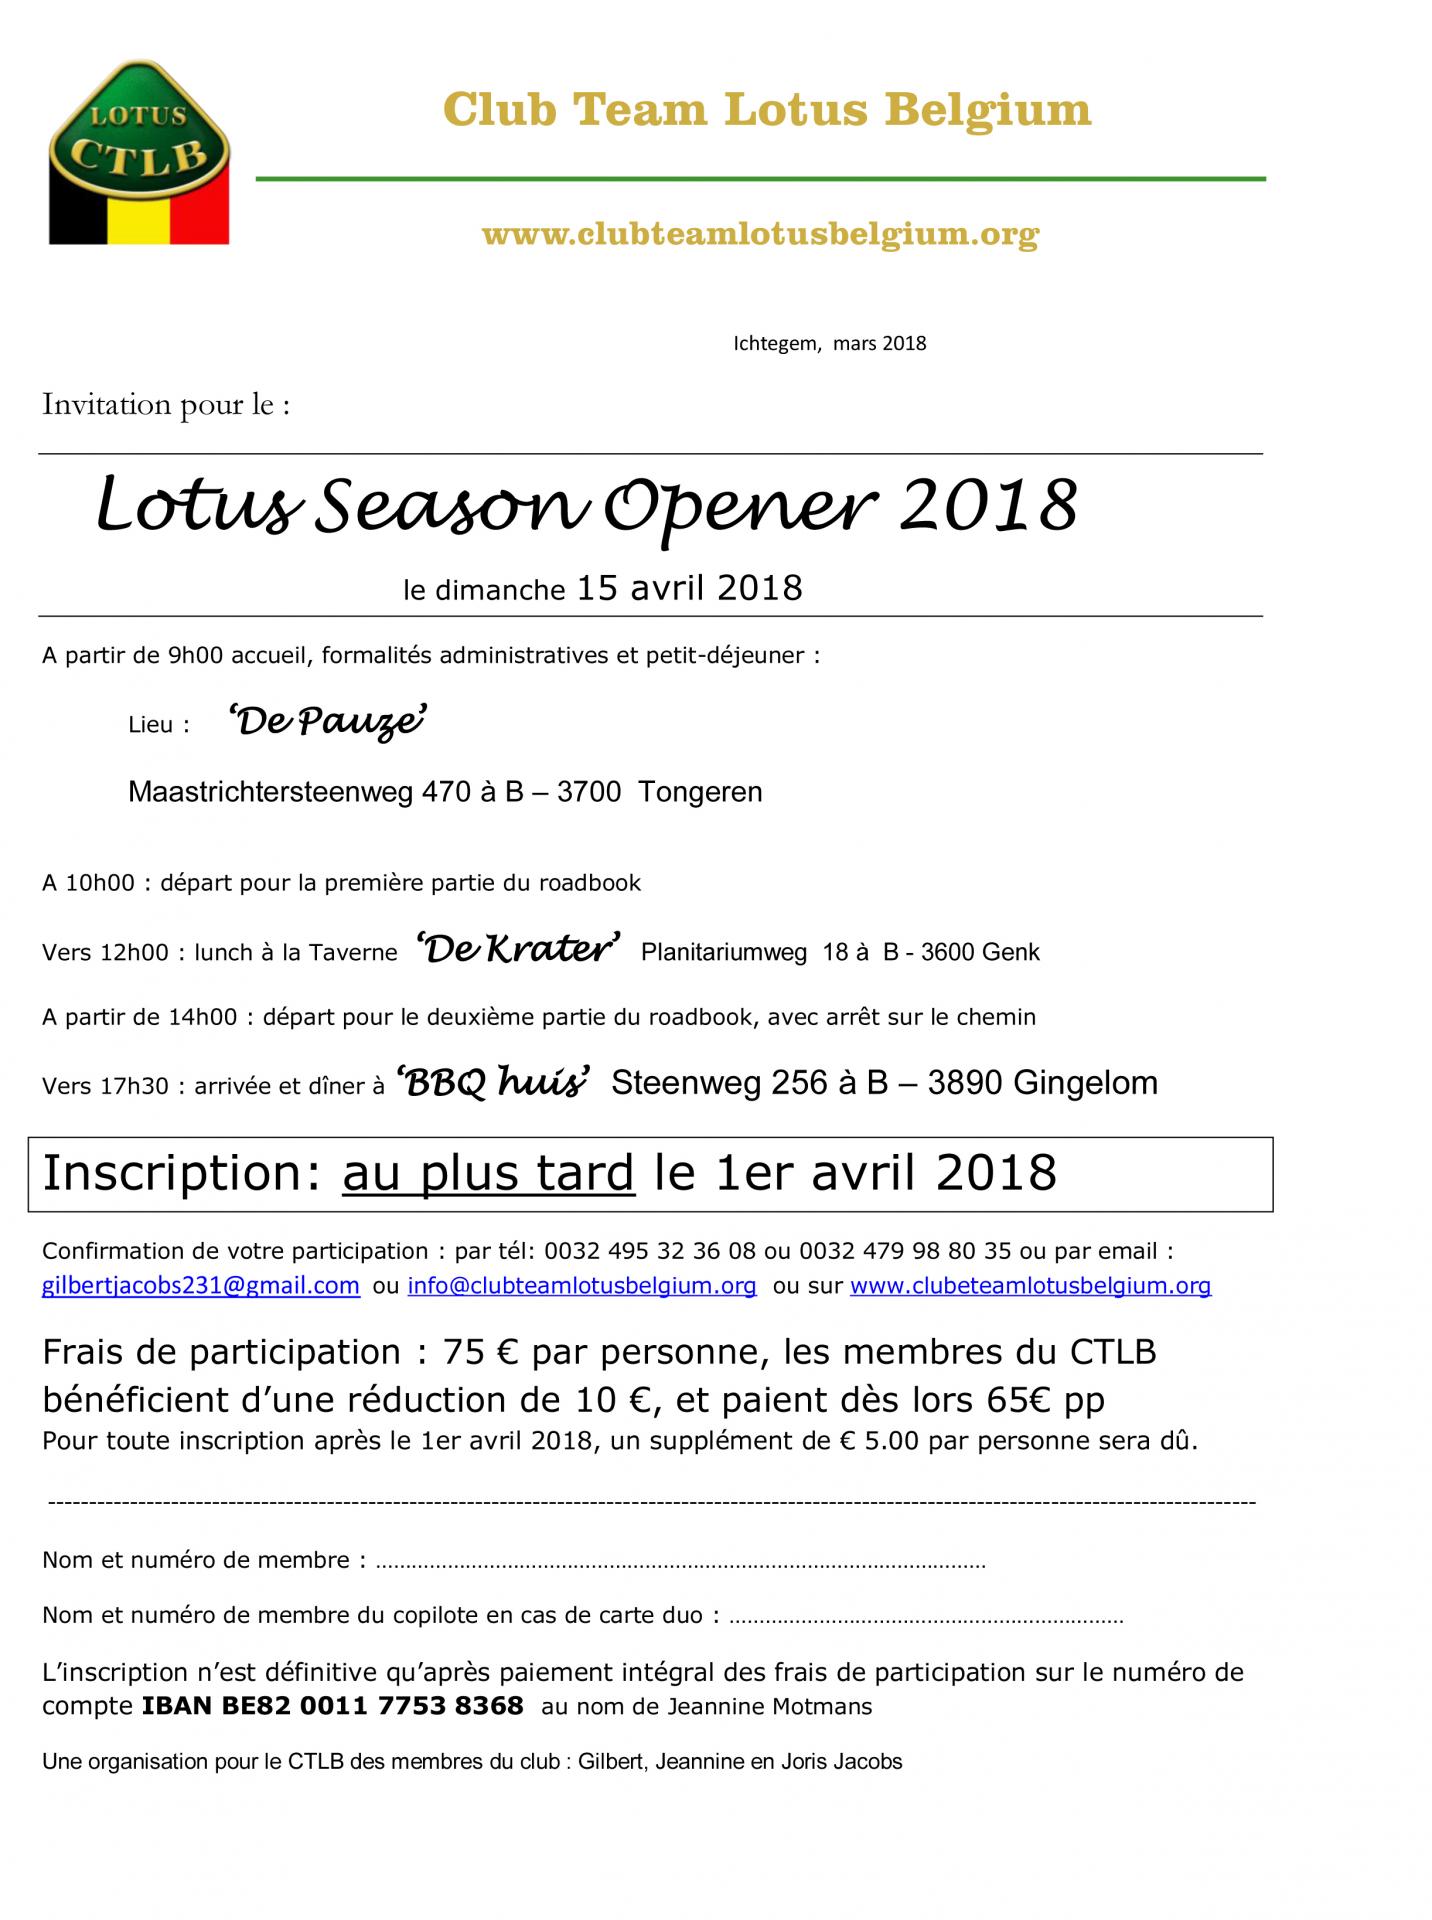 Invitation lotus season opener